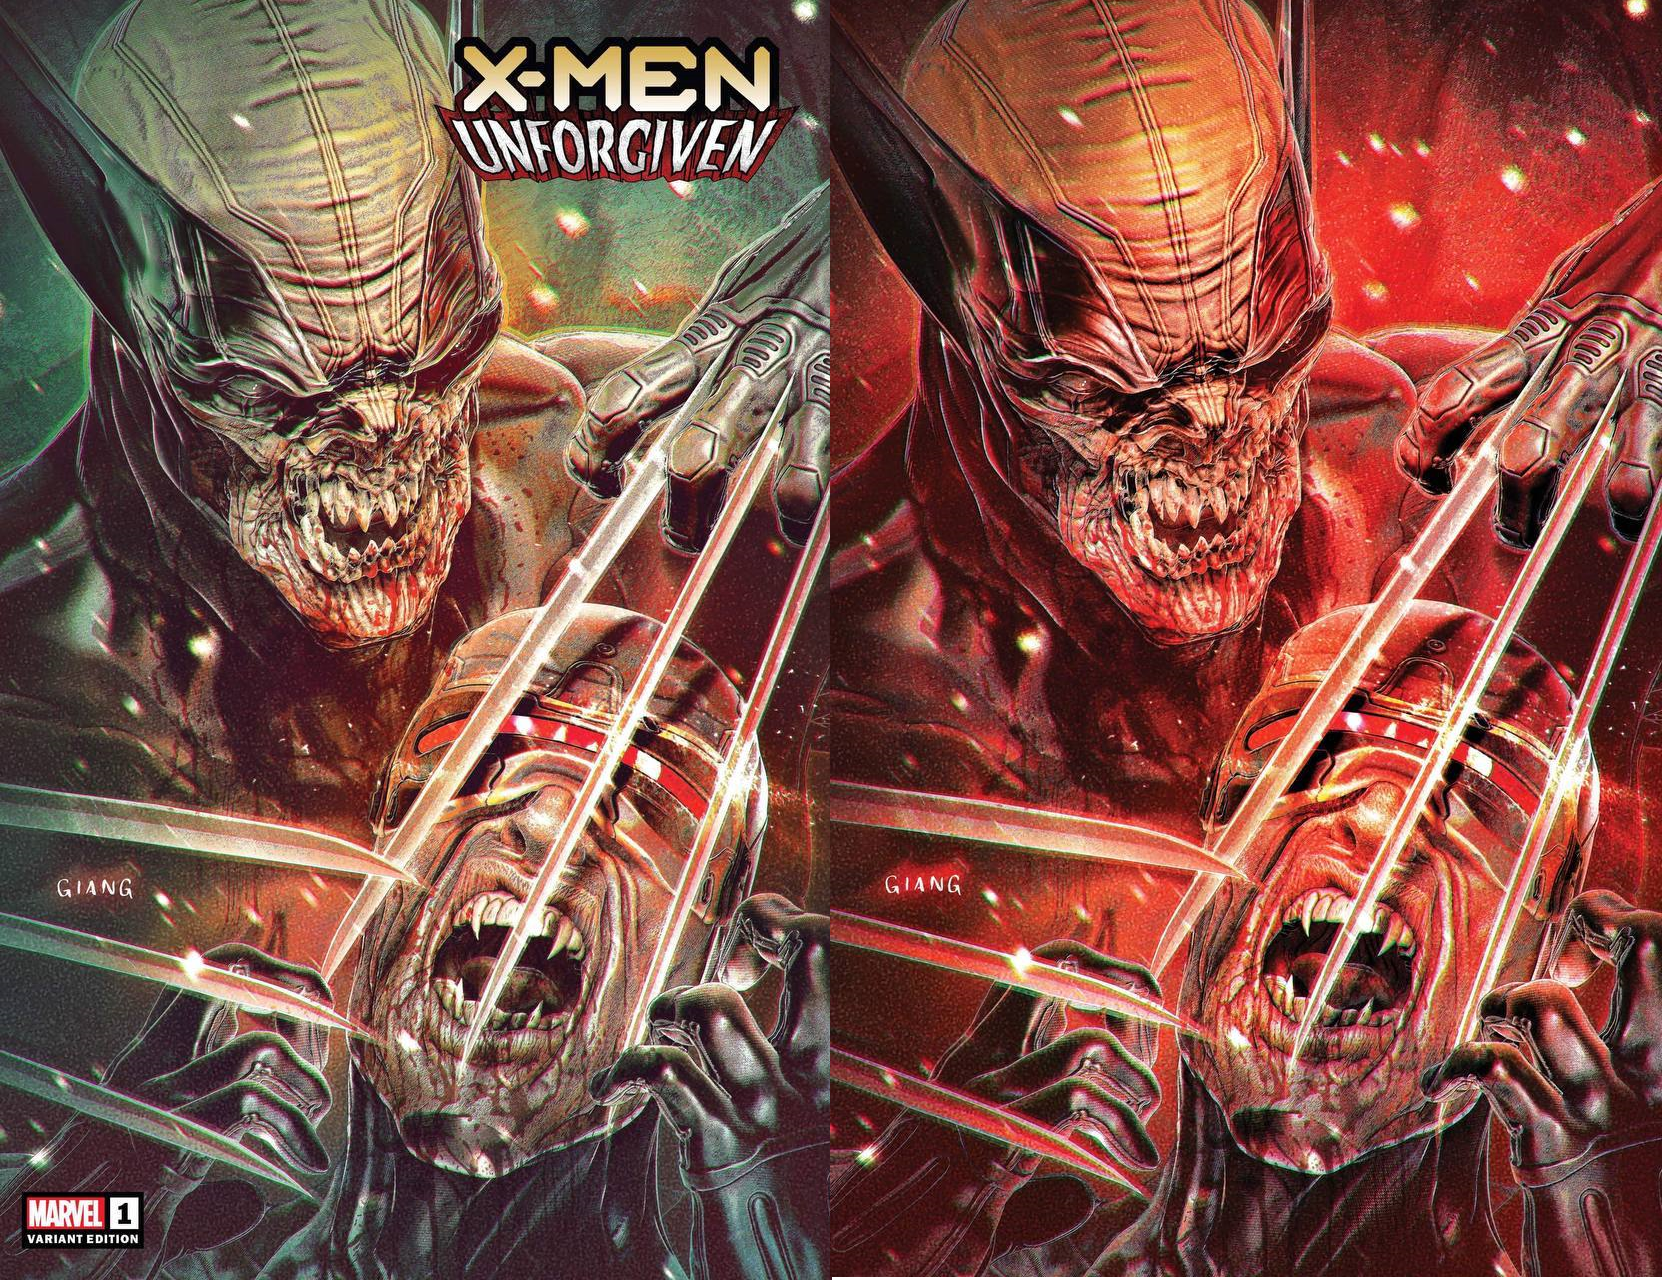 X-MEN UNFORGIVEN #1 JOHN GIANG CVR - SET - EXCLUSIVE (In-Store: TBD - REDO PRINT RUN)